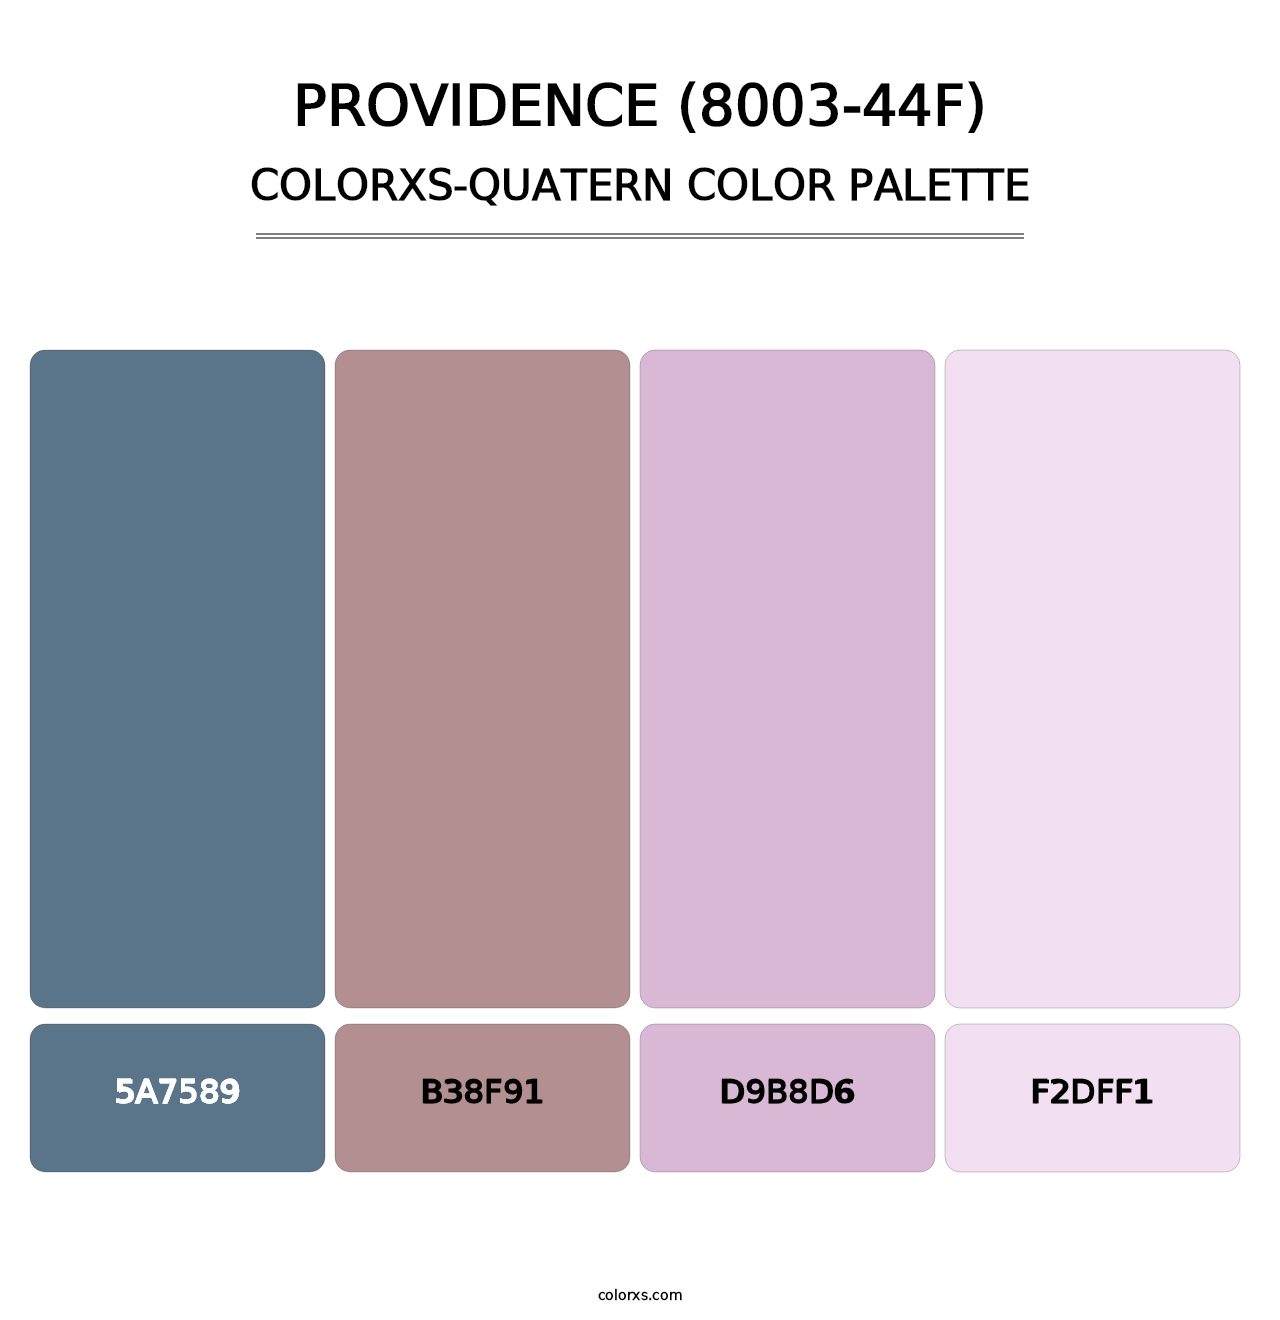 Providence (8003-44F) - Colorxs Quatern Palette